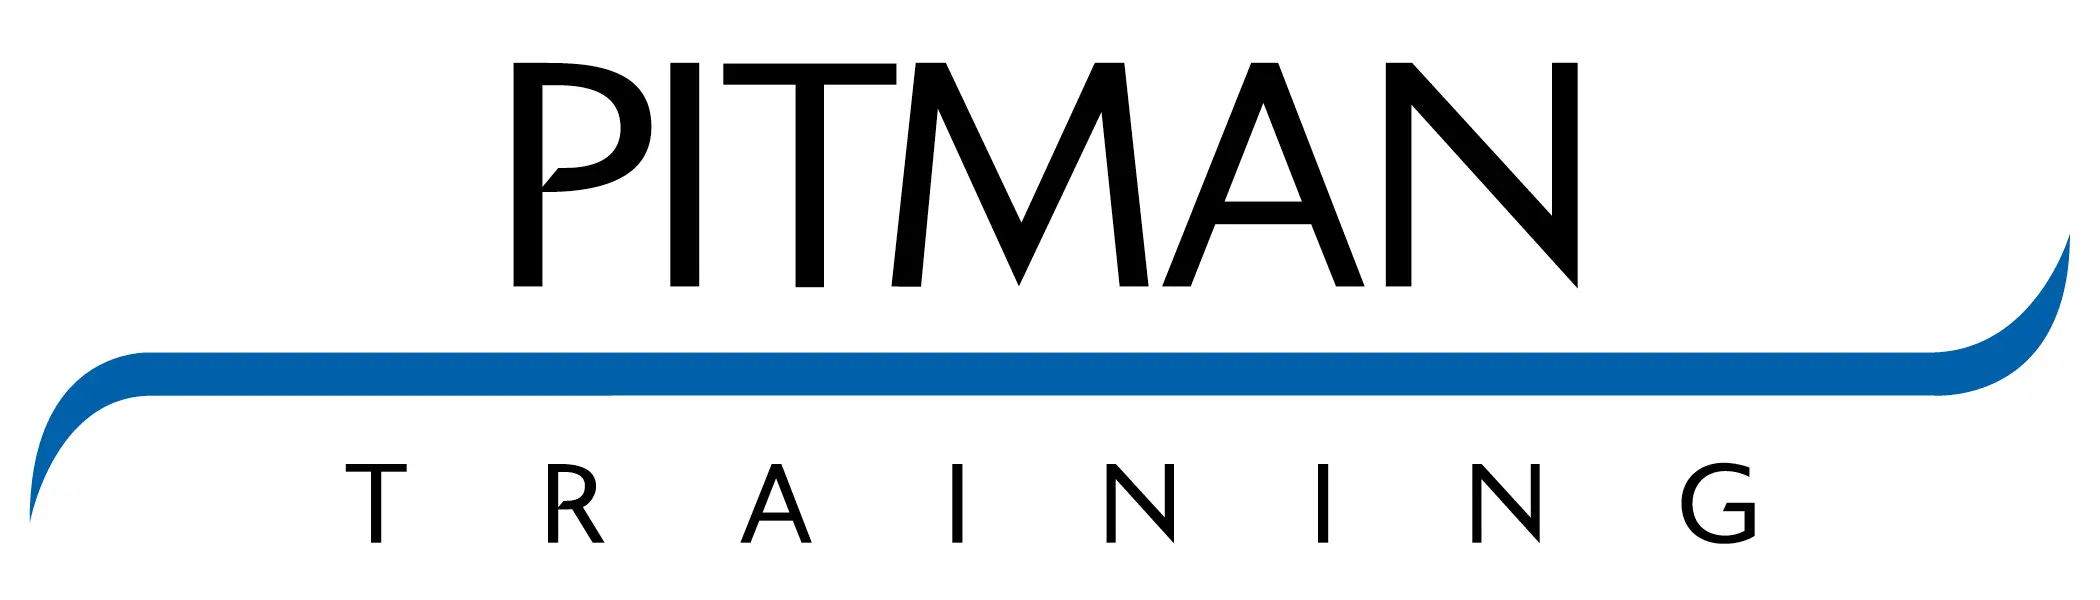 Sally runs Pitman Training Canterbury, having joined the network in 2016. (Pitman Training Canterbury)